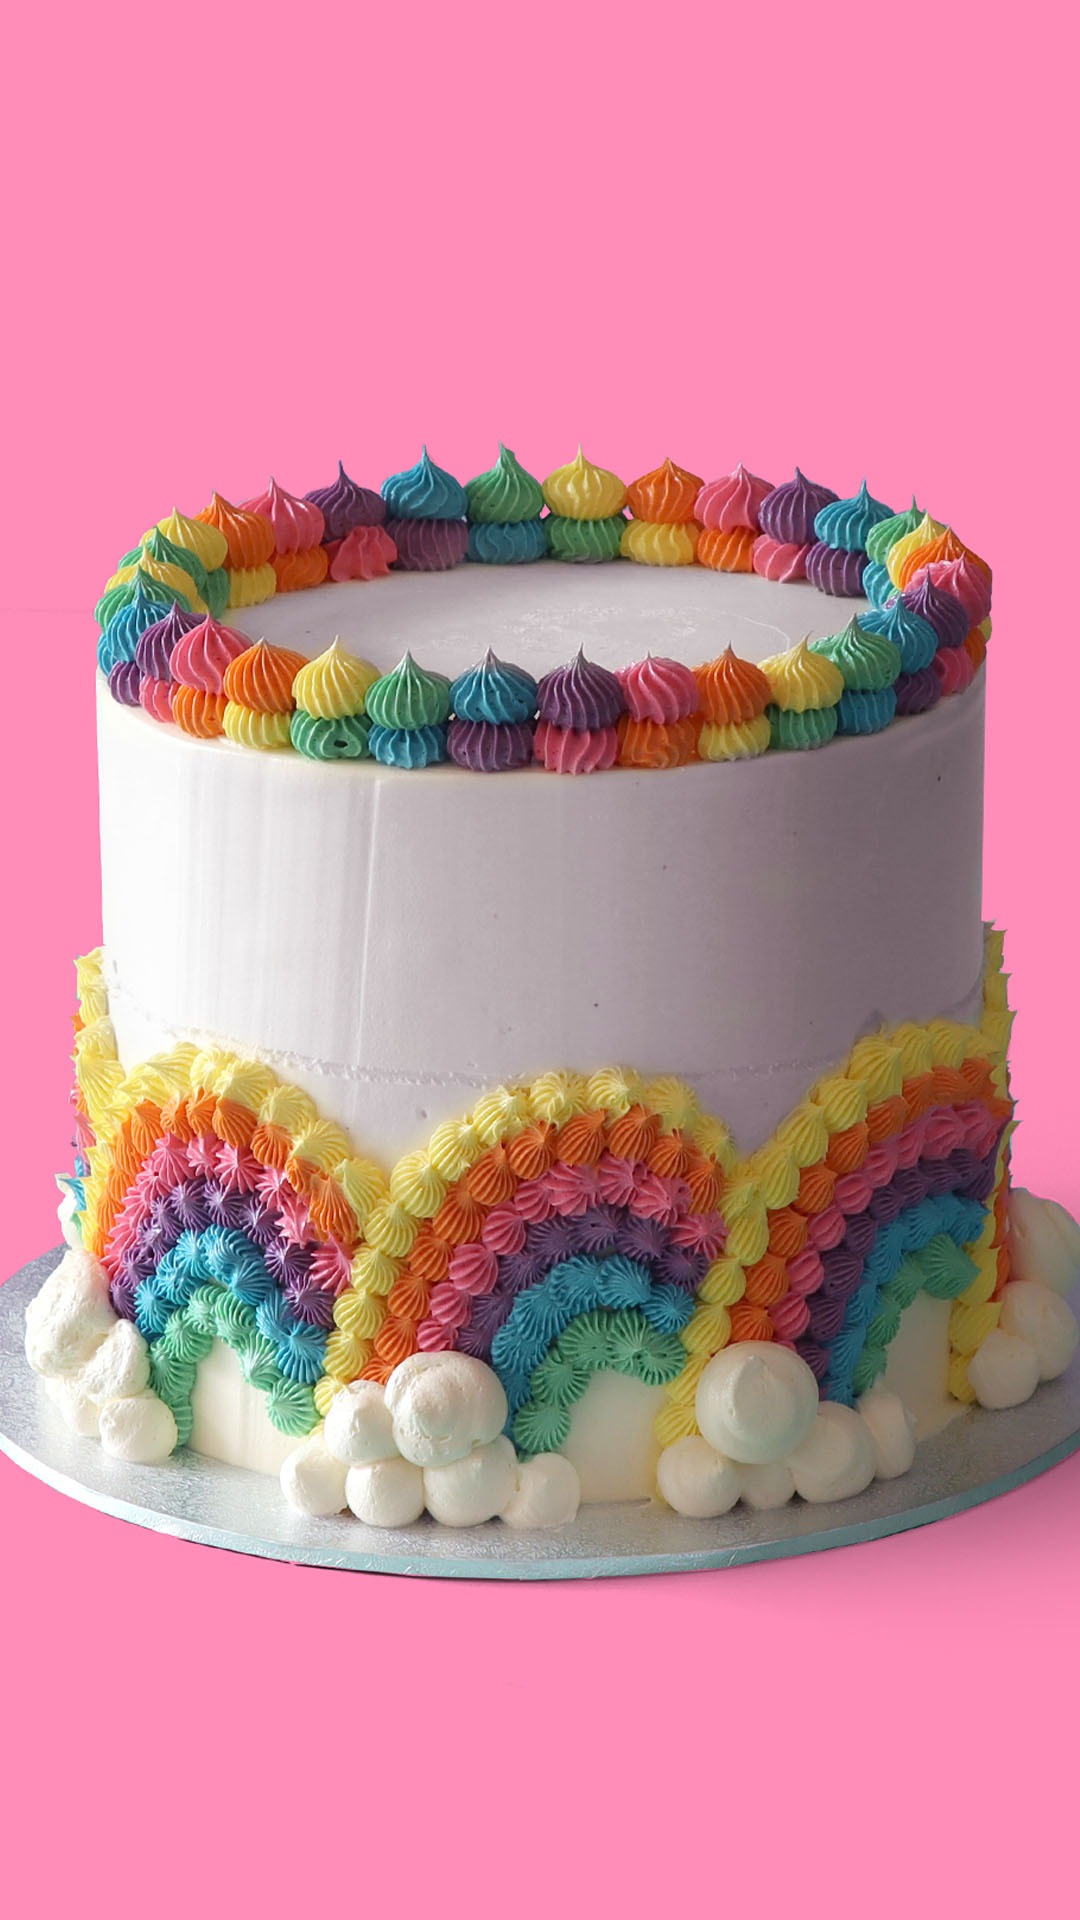 Buy Fresho Signature Rainbow Cake Online at Best Price of Rs 219 - bigbasket